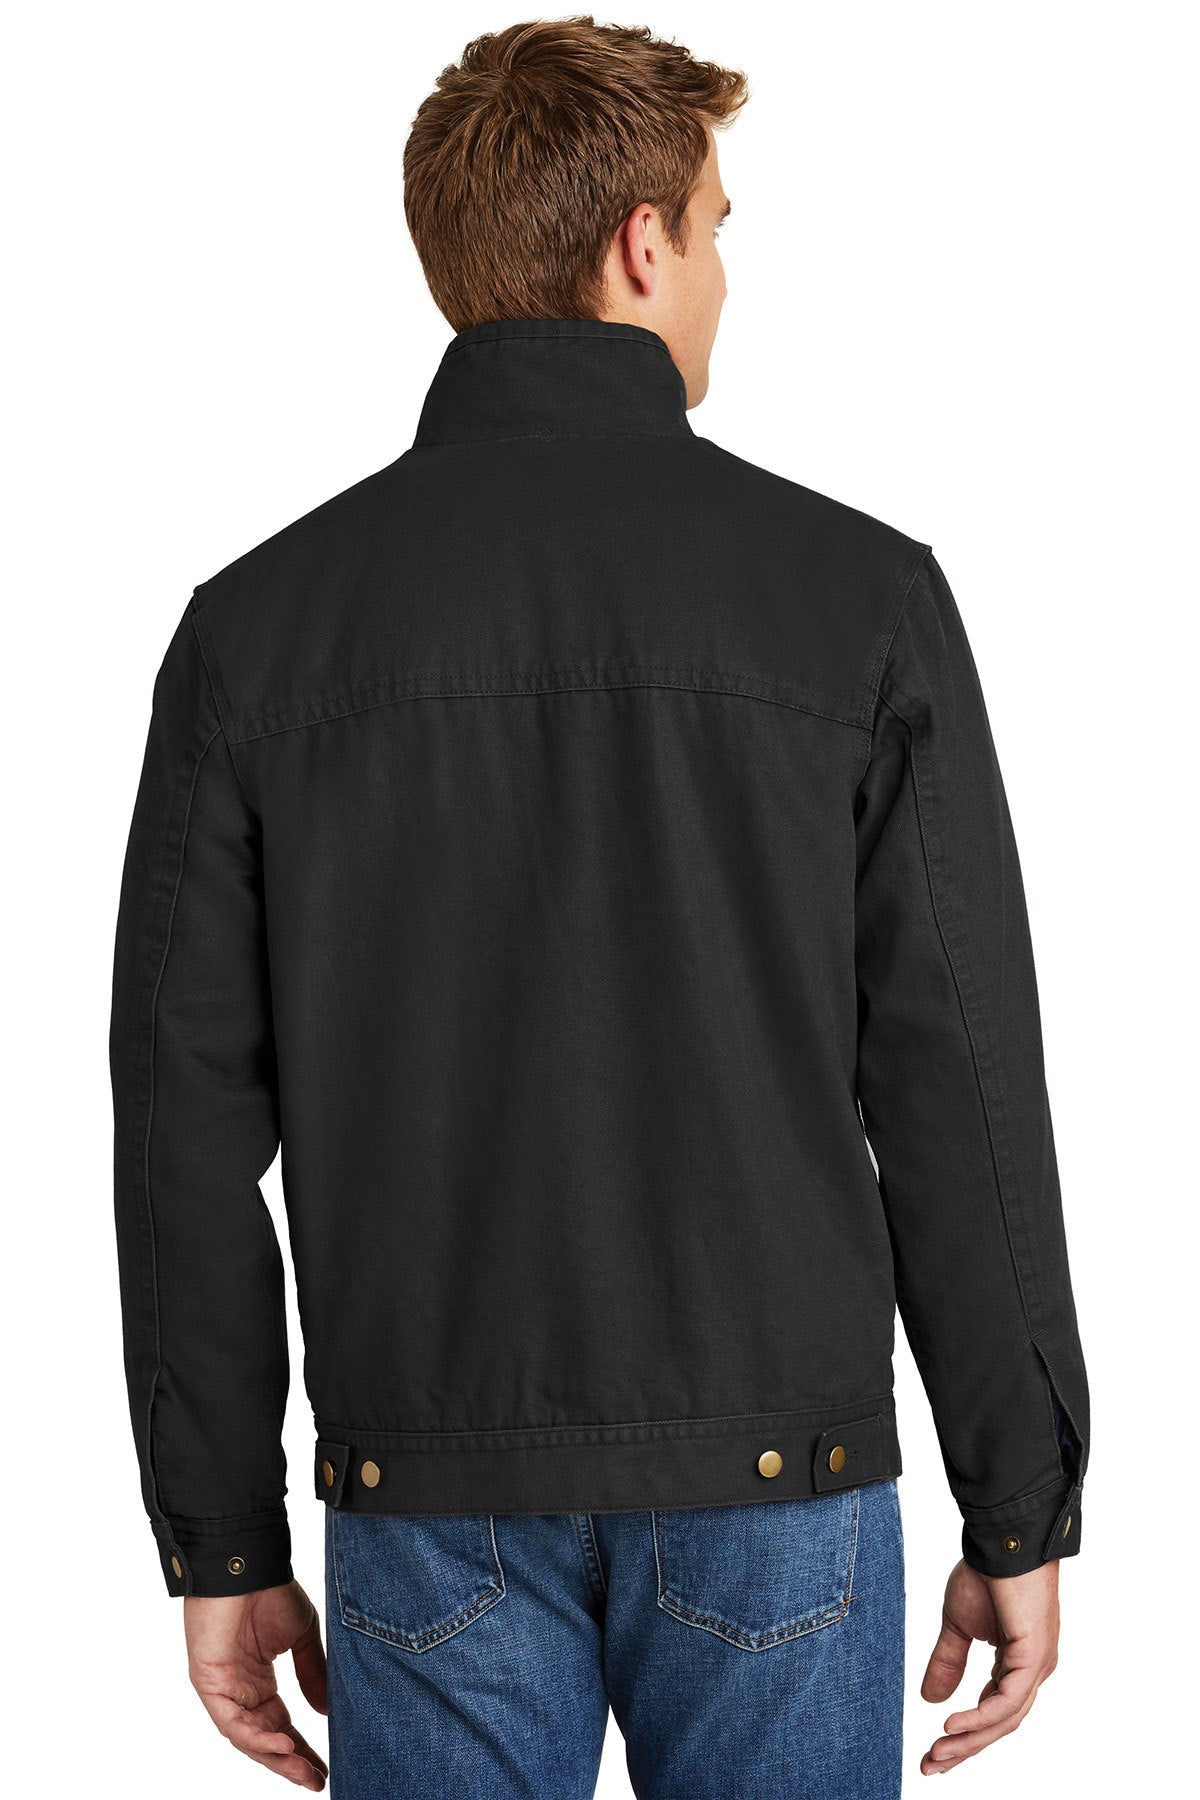 cornerstone_csj40 _black_company_logo_jackets